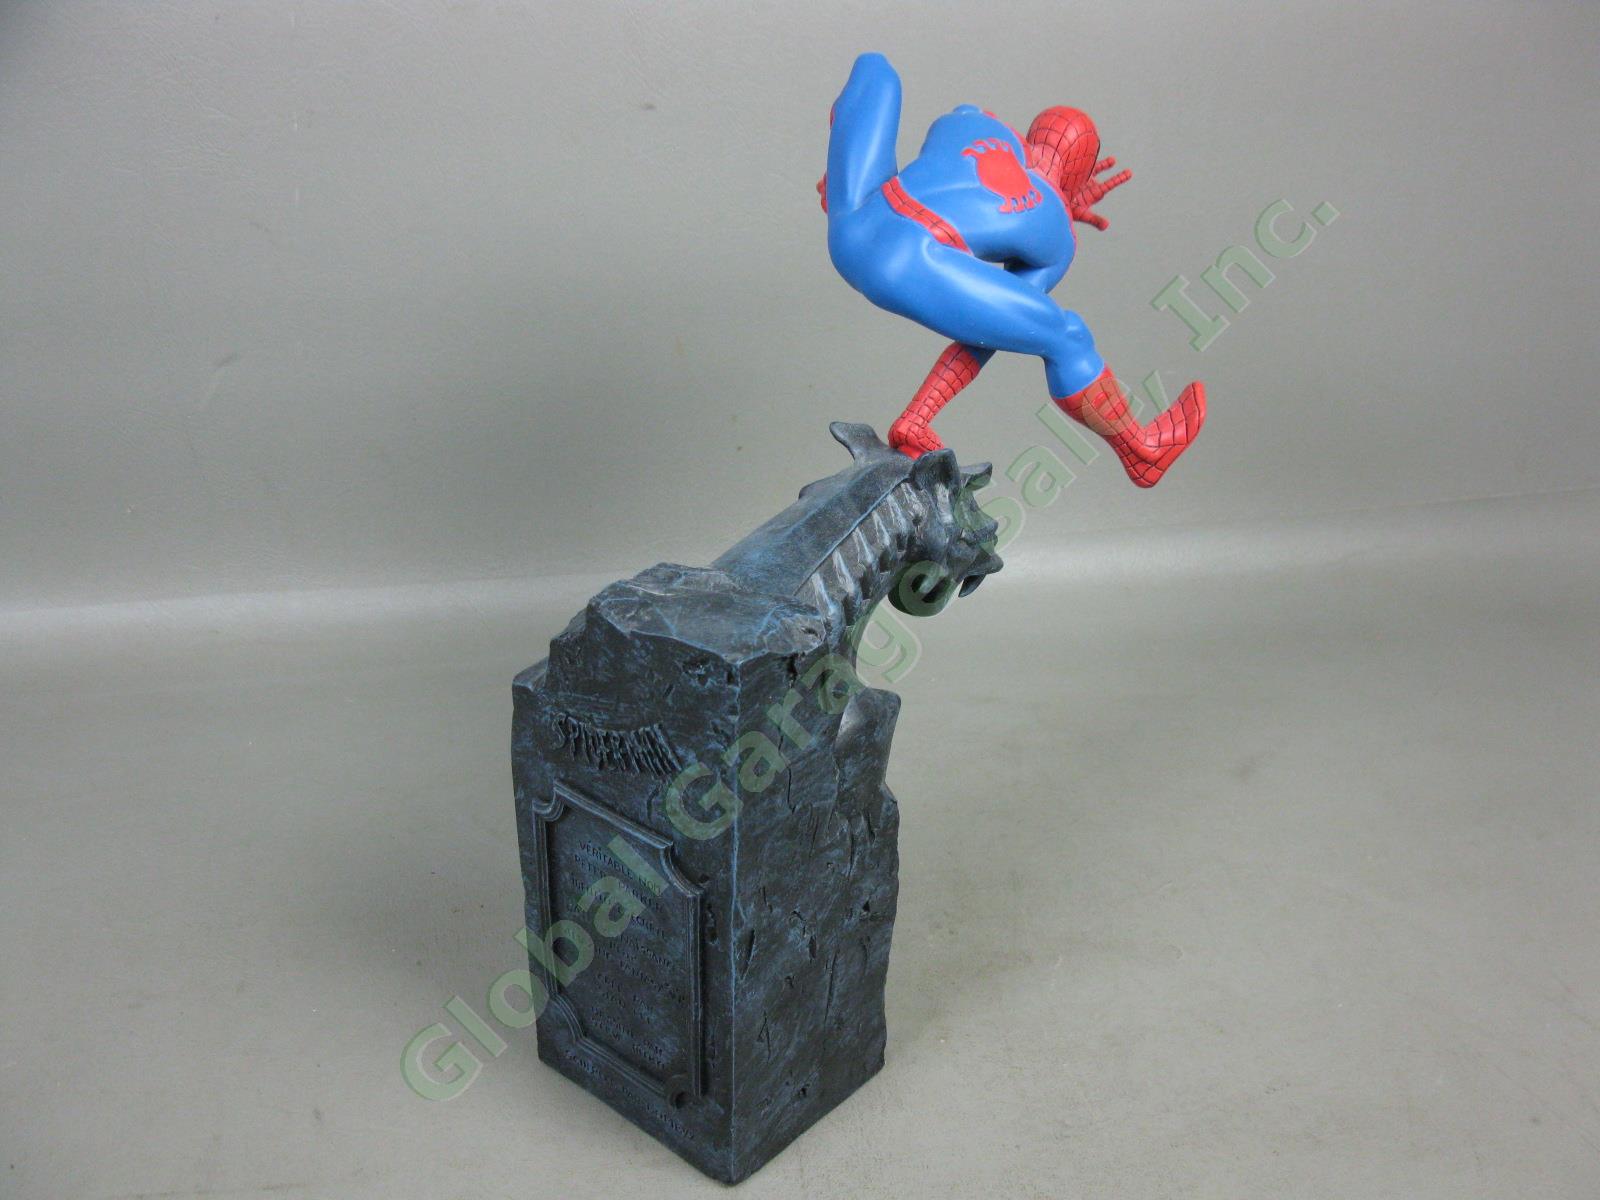 NIB 1997 Attakus Marvel Comics Spiderman Gargoyle Porcelain Statue C400 Bombyx 5